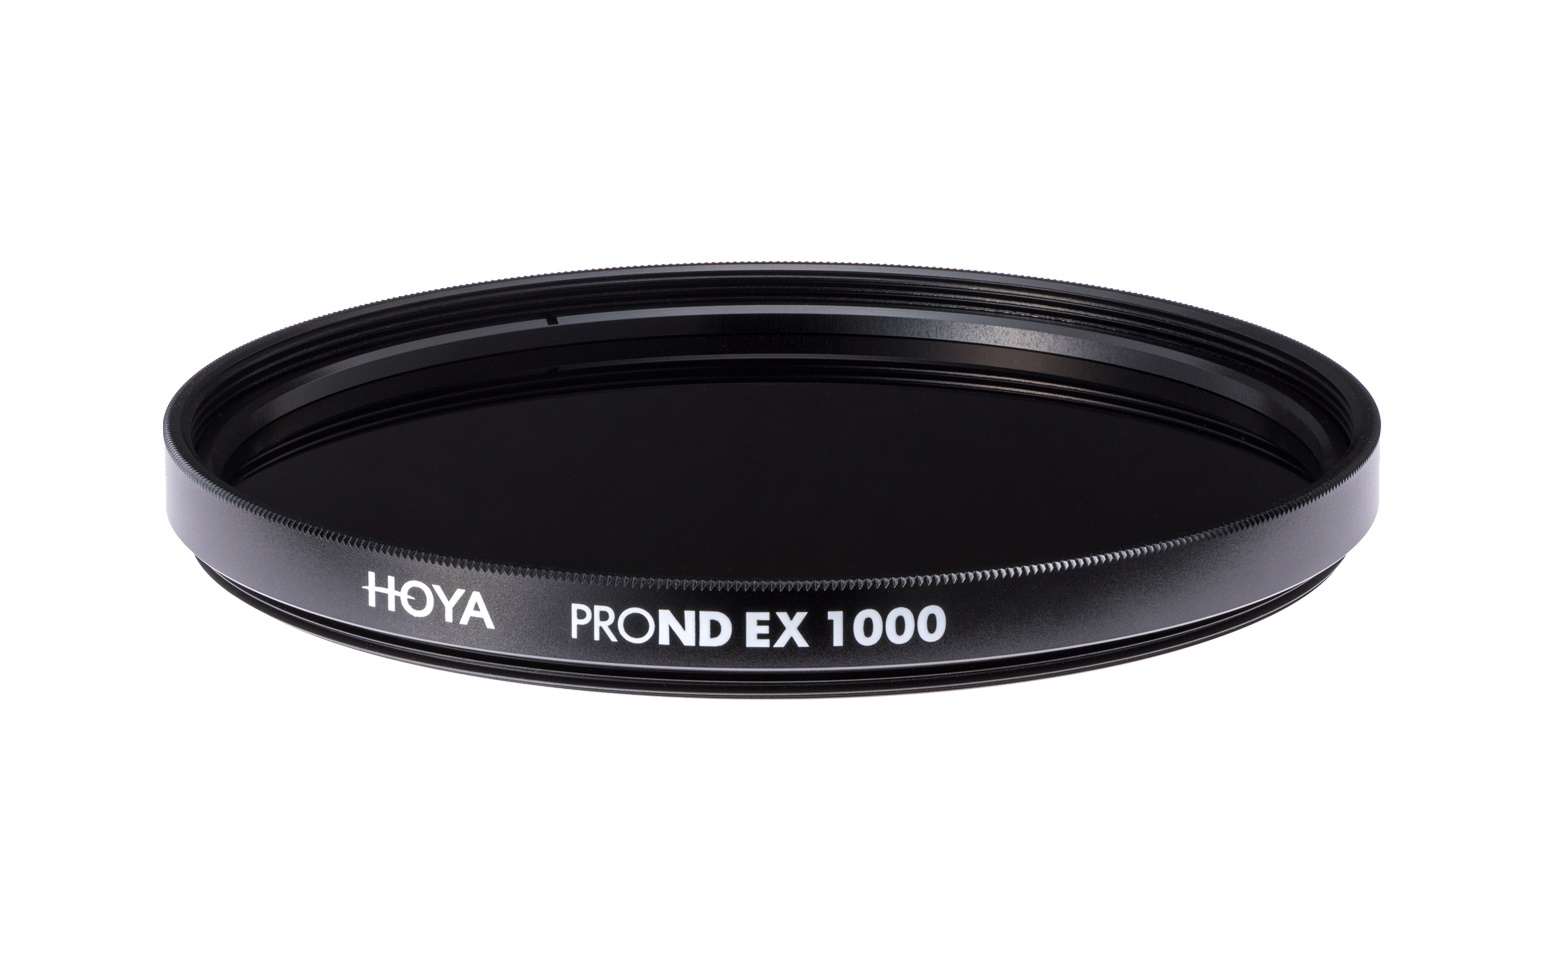 Hoya PROND EX 1000